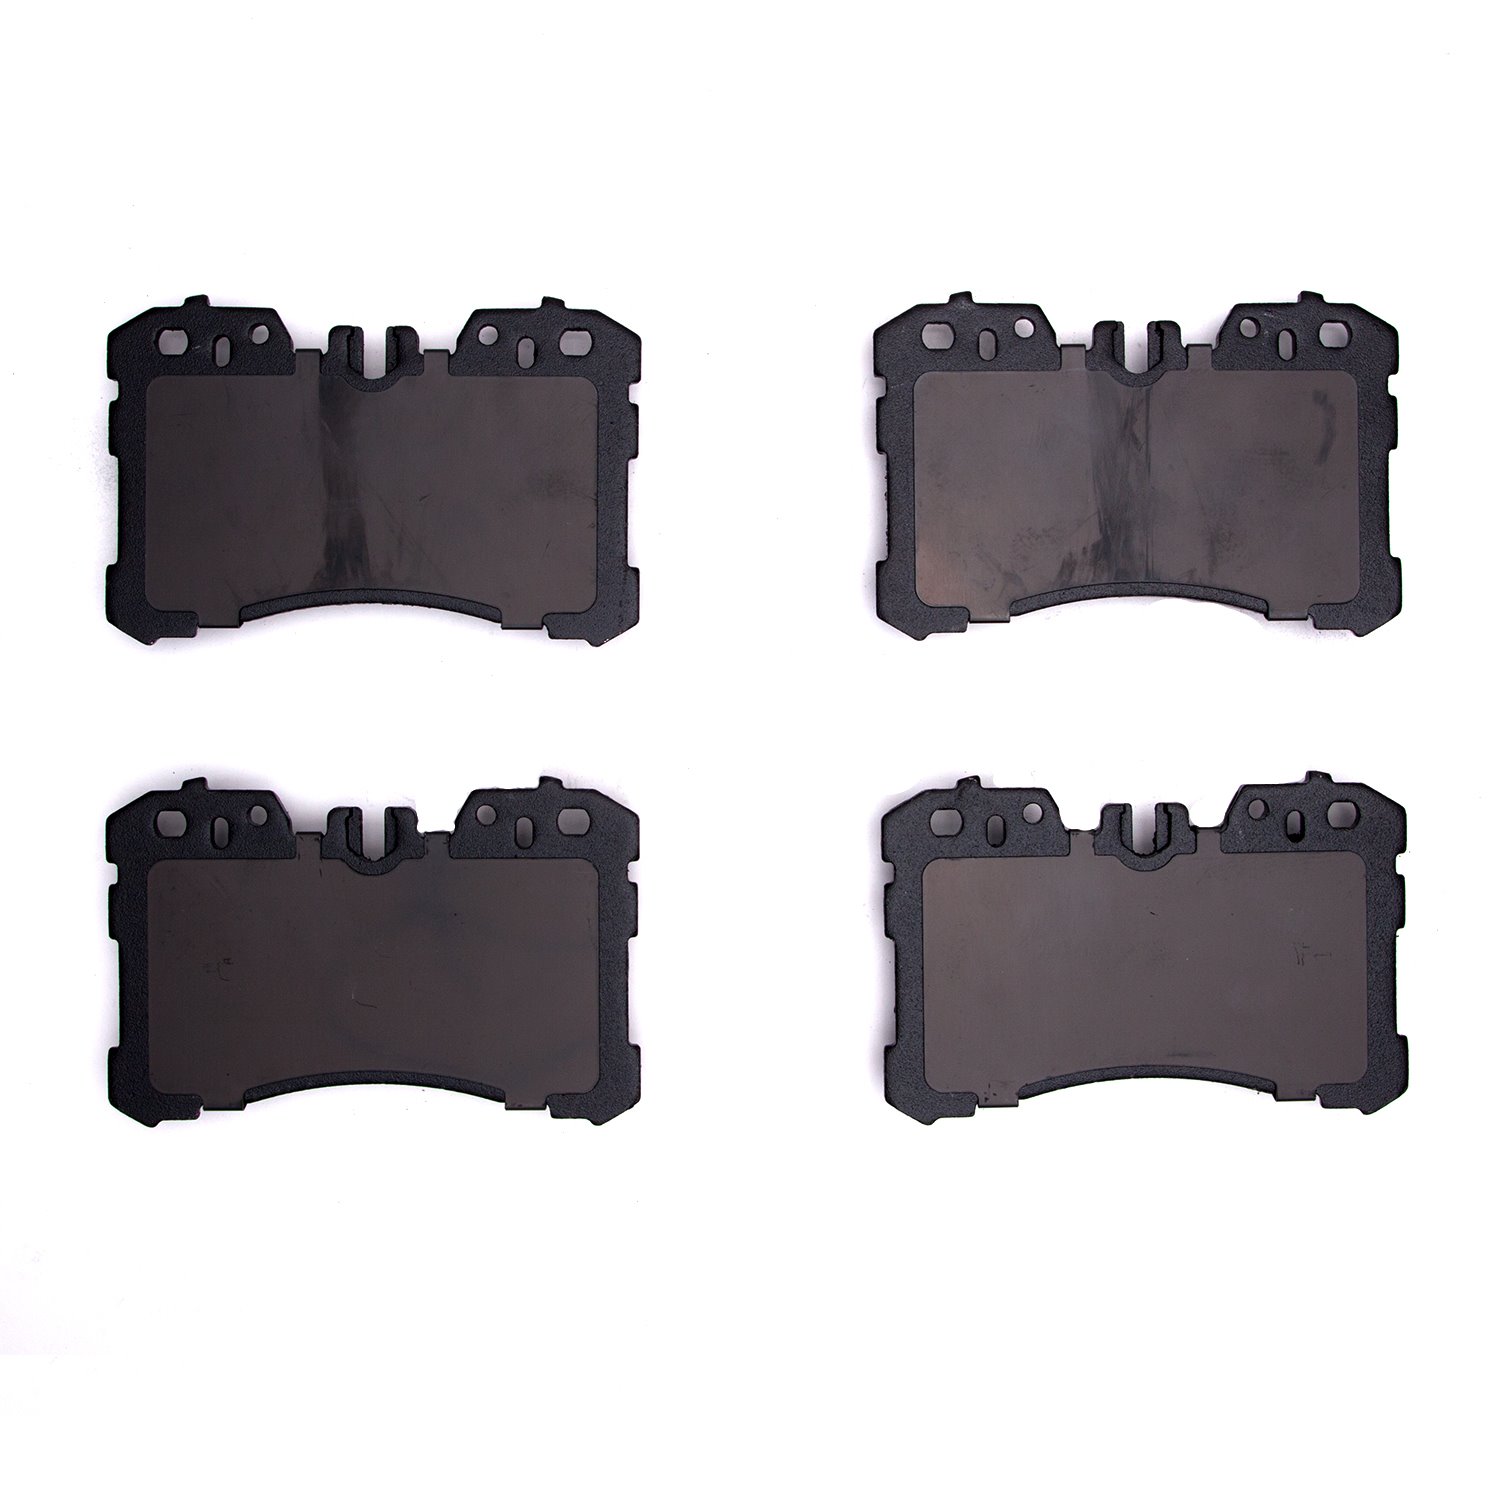 1000-1282-00 Track/Street Low-Metallic Brake Pads Kit, Fits Select Lexus/Toyota/Scion, Position: Front